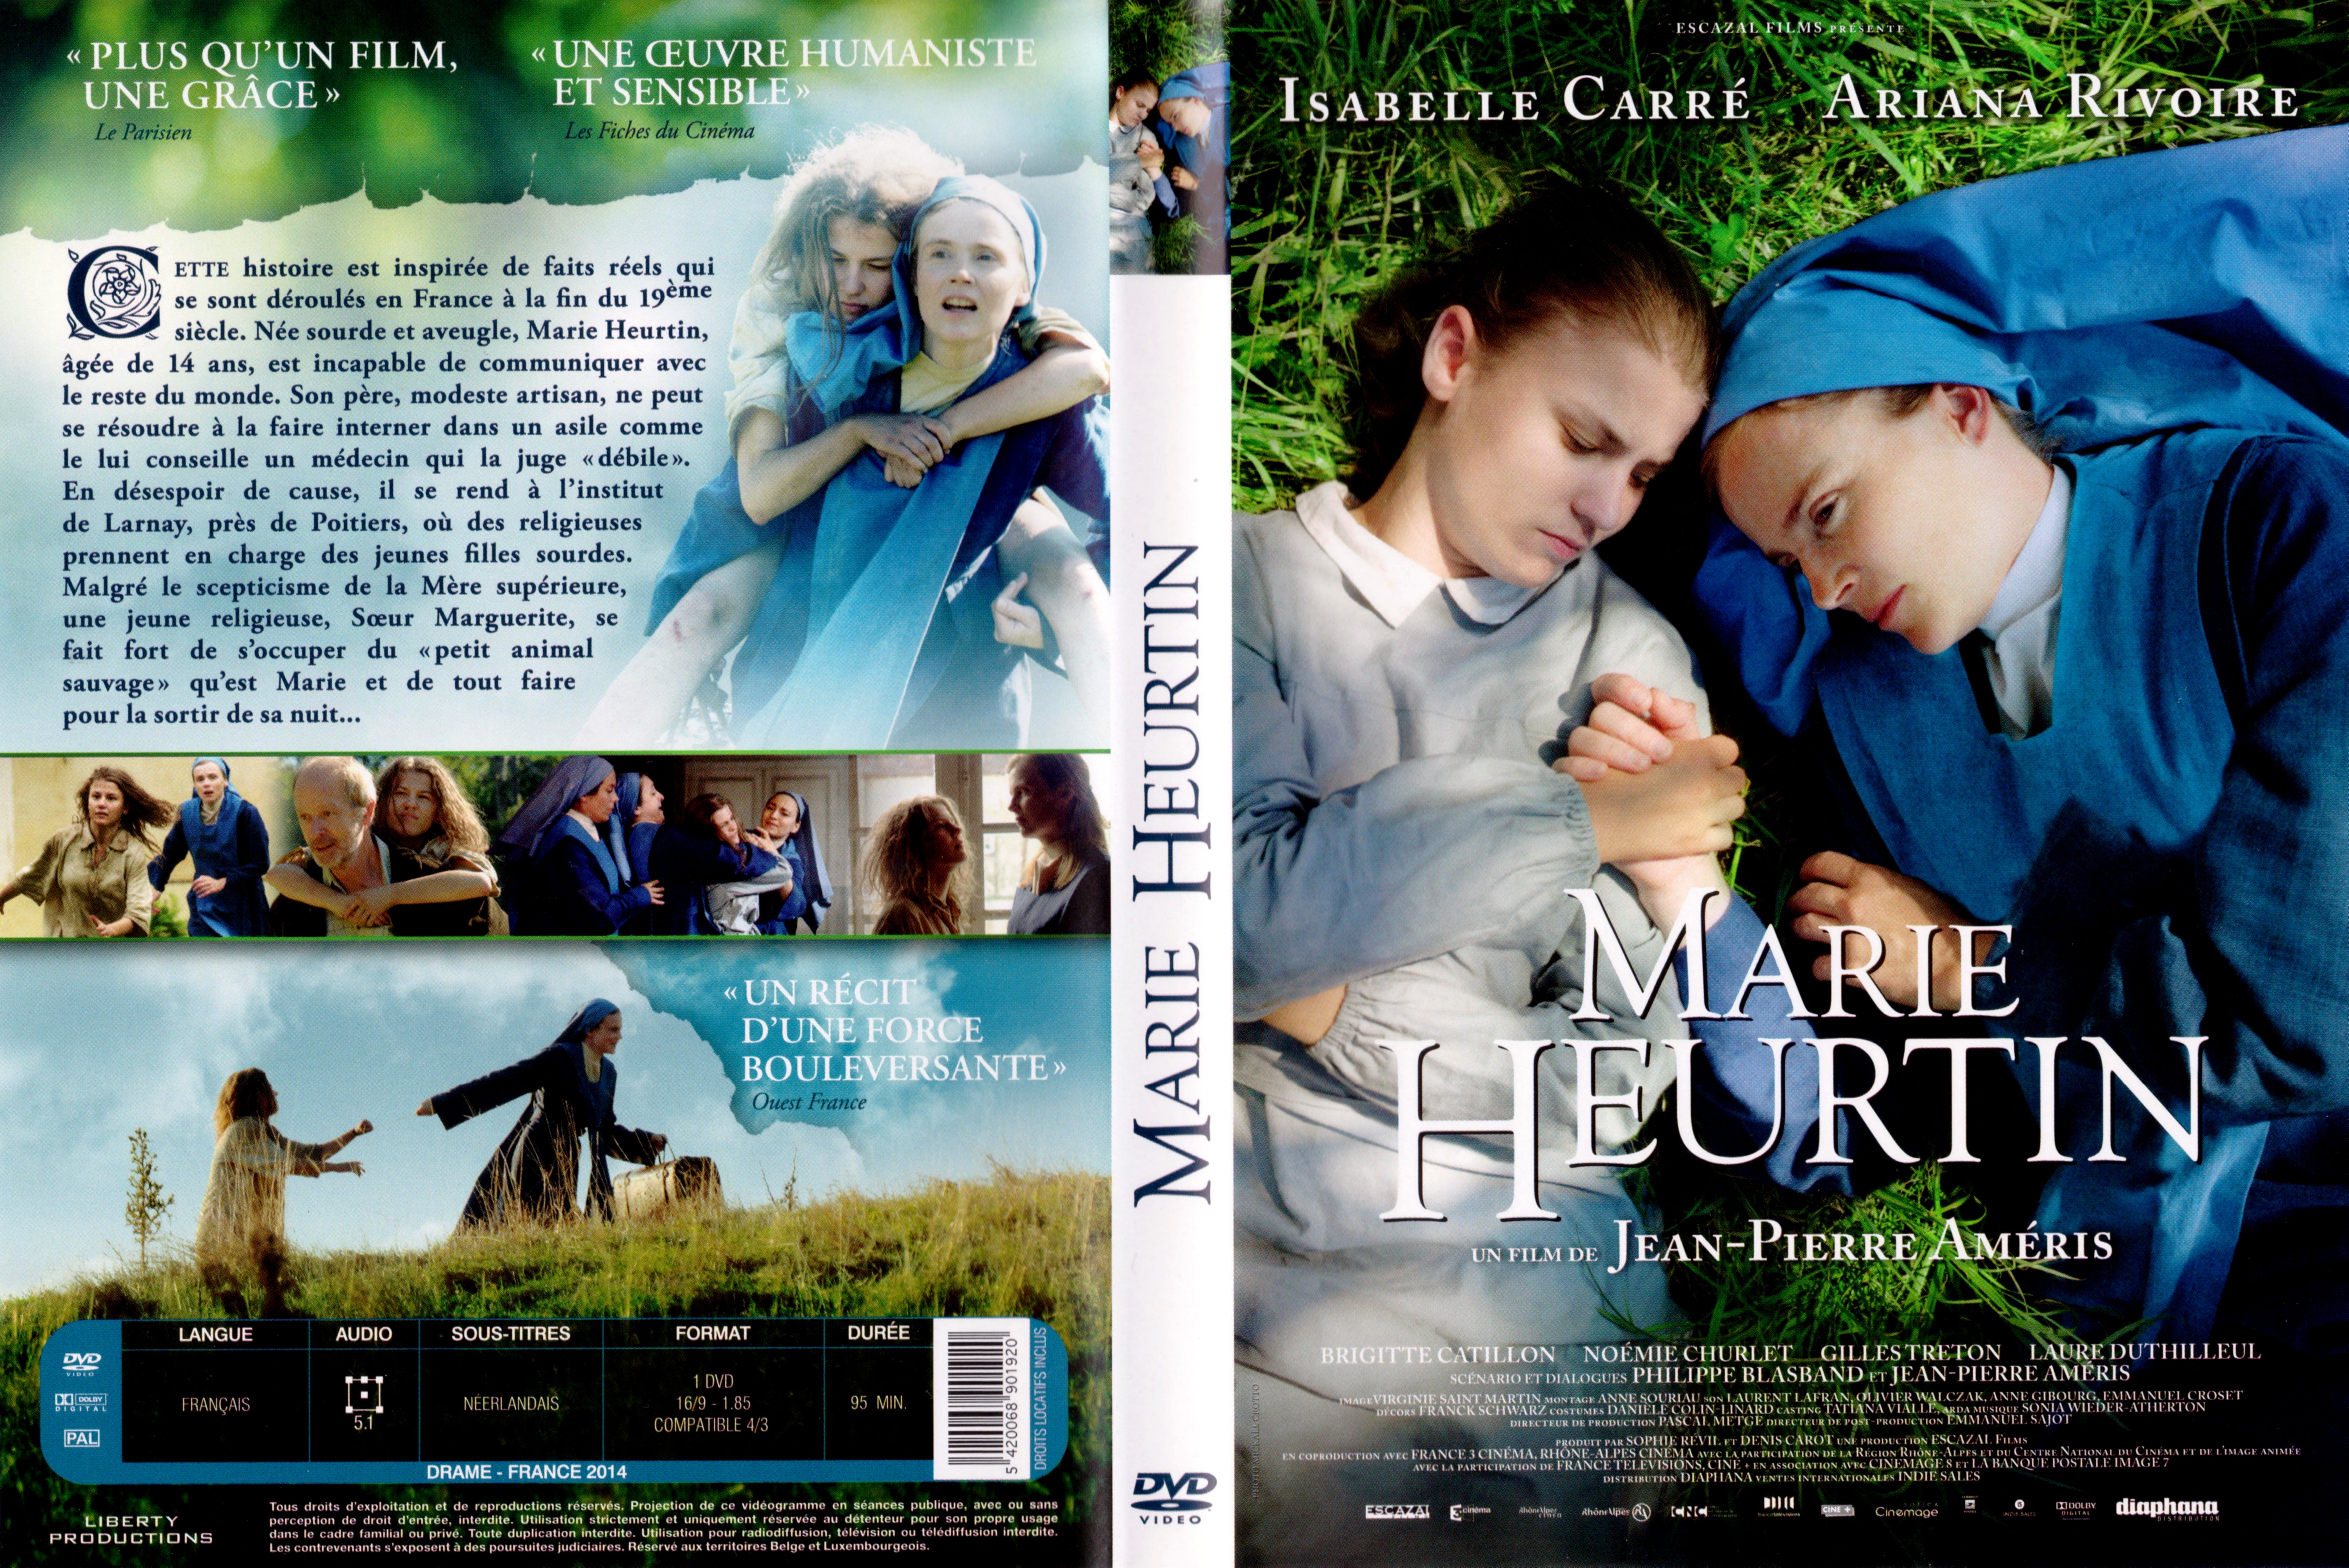 Jaquette DVD Marie Heurtin v2